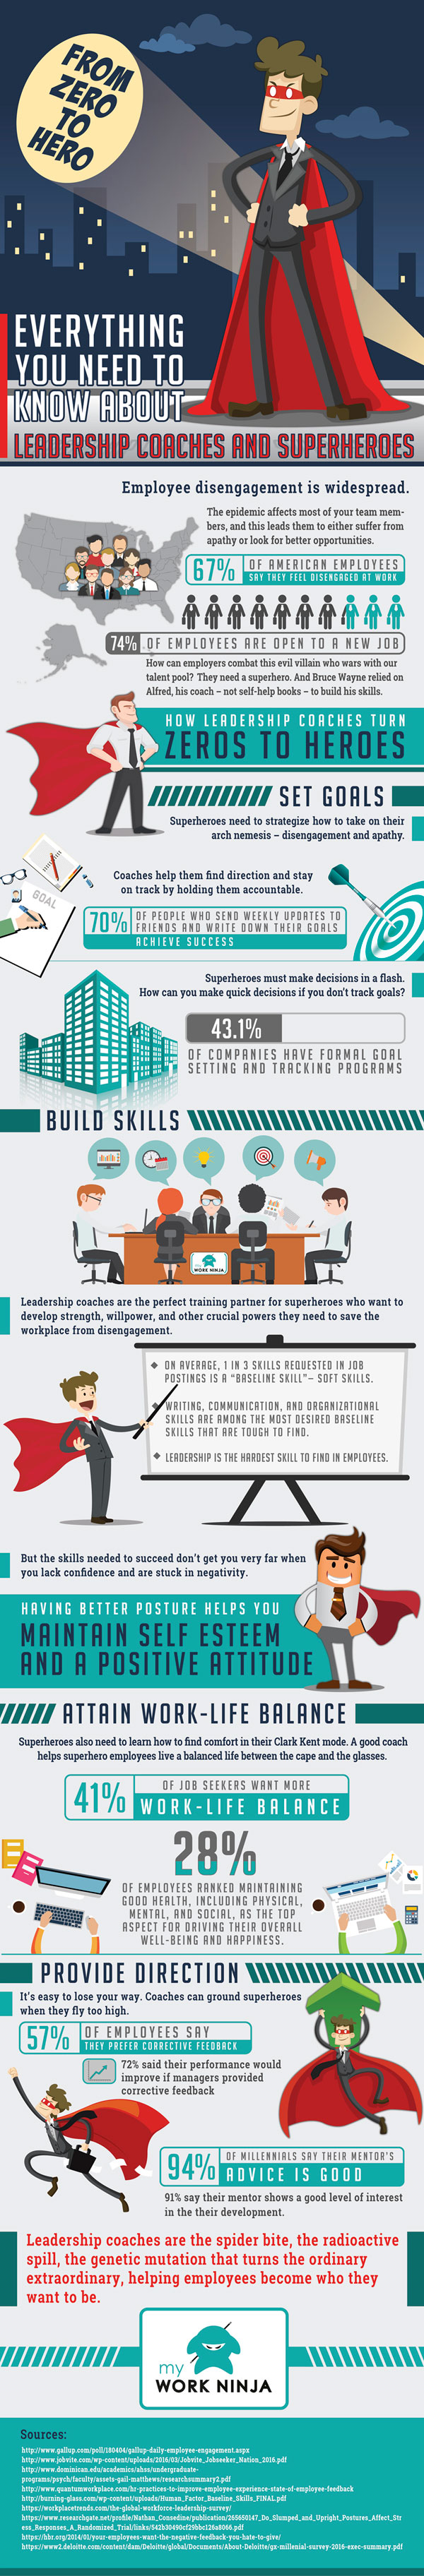 infographic-create-superhero-employees-with-leadership-coaching